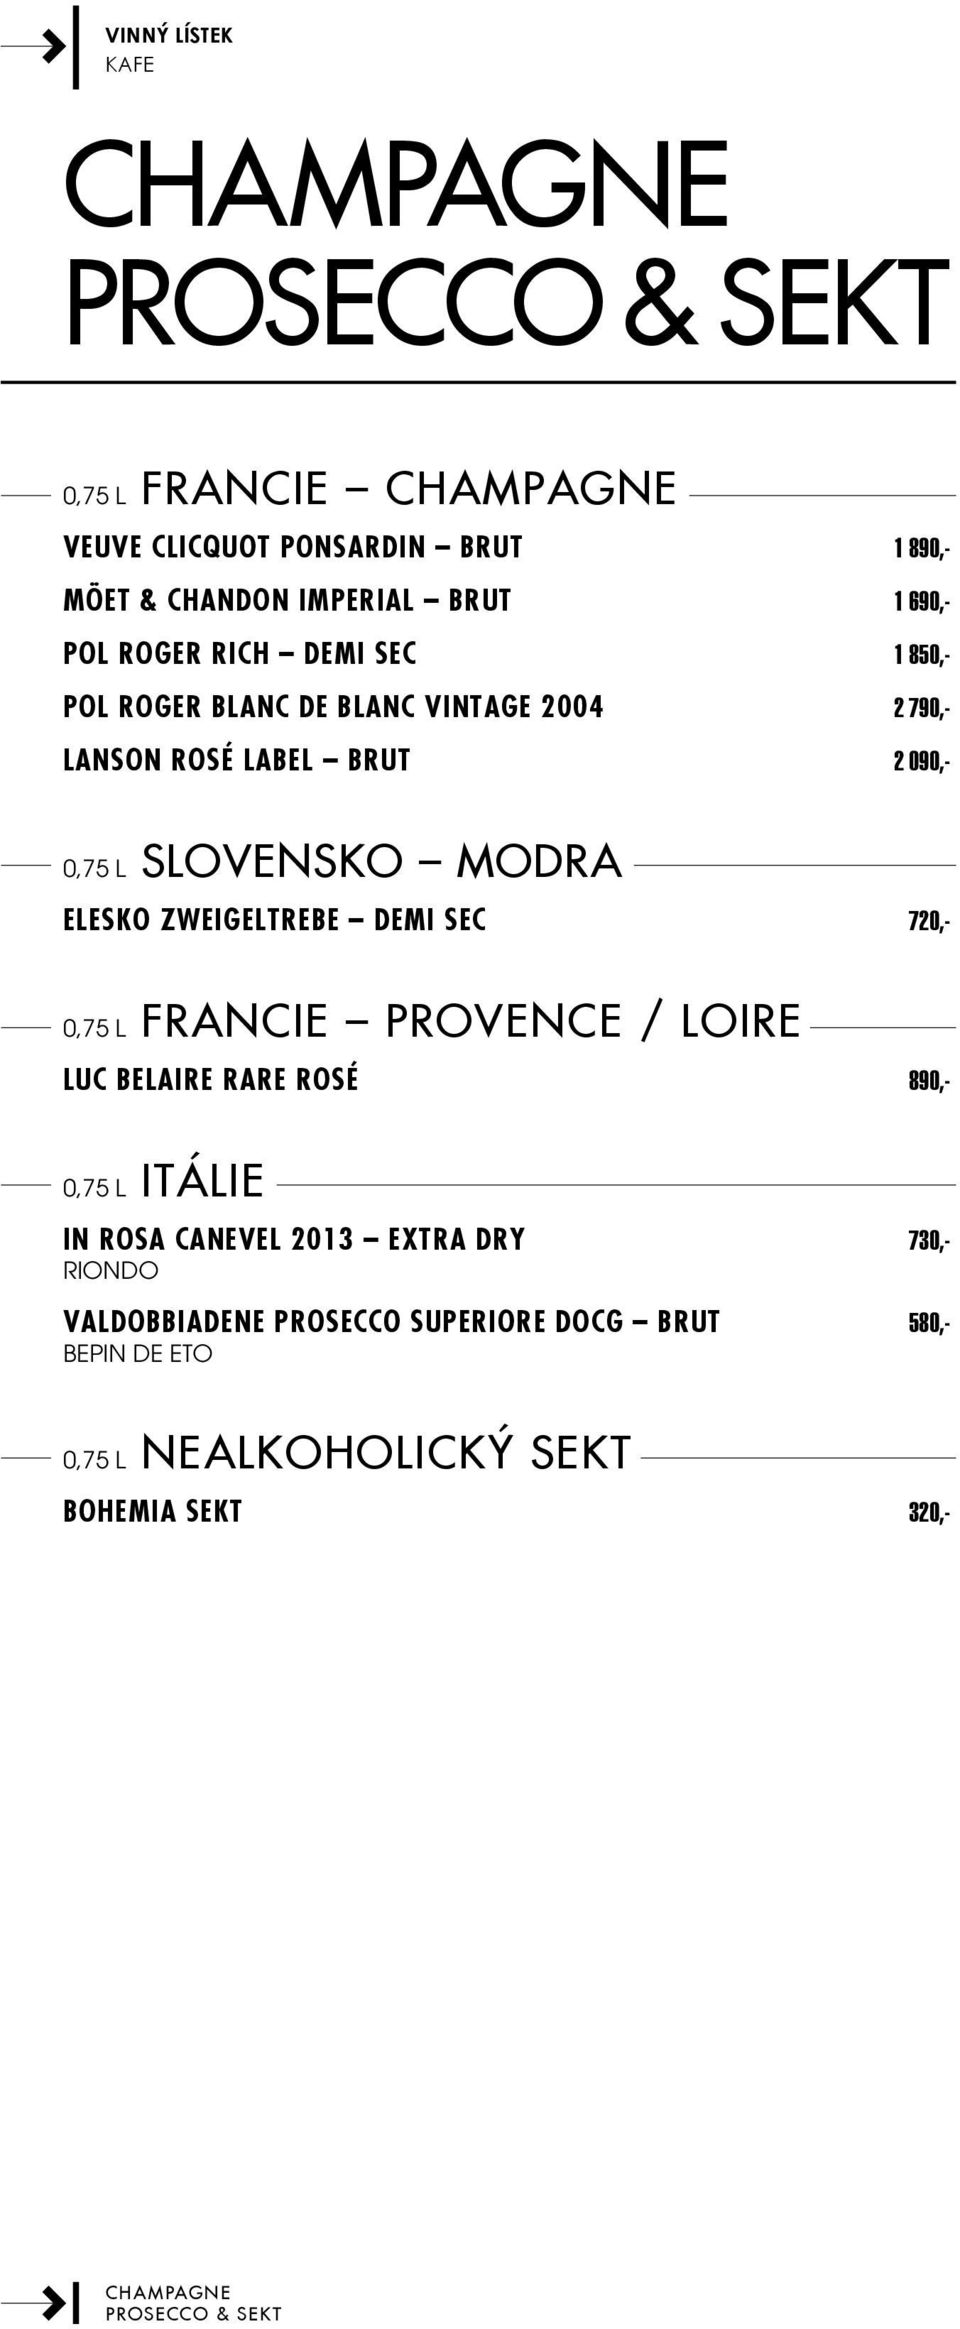 Zweigeltrebe demi sec 720,- 0,75 l FRANCIE Provence / Loire Luc Belaire Rare rosé 890,- 0,75 l ITÁLIE In Rosa Canevel 2013 extra dry